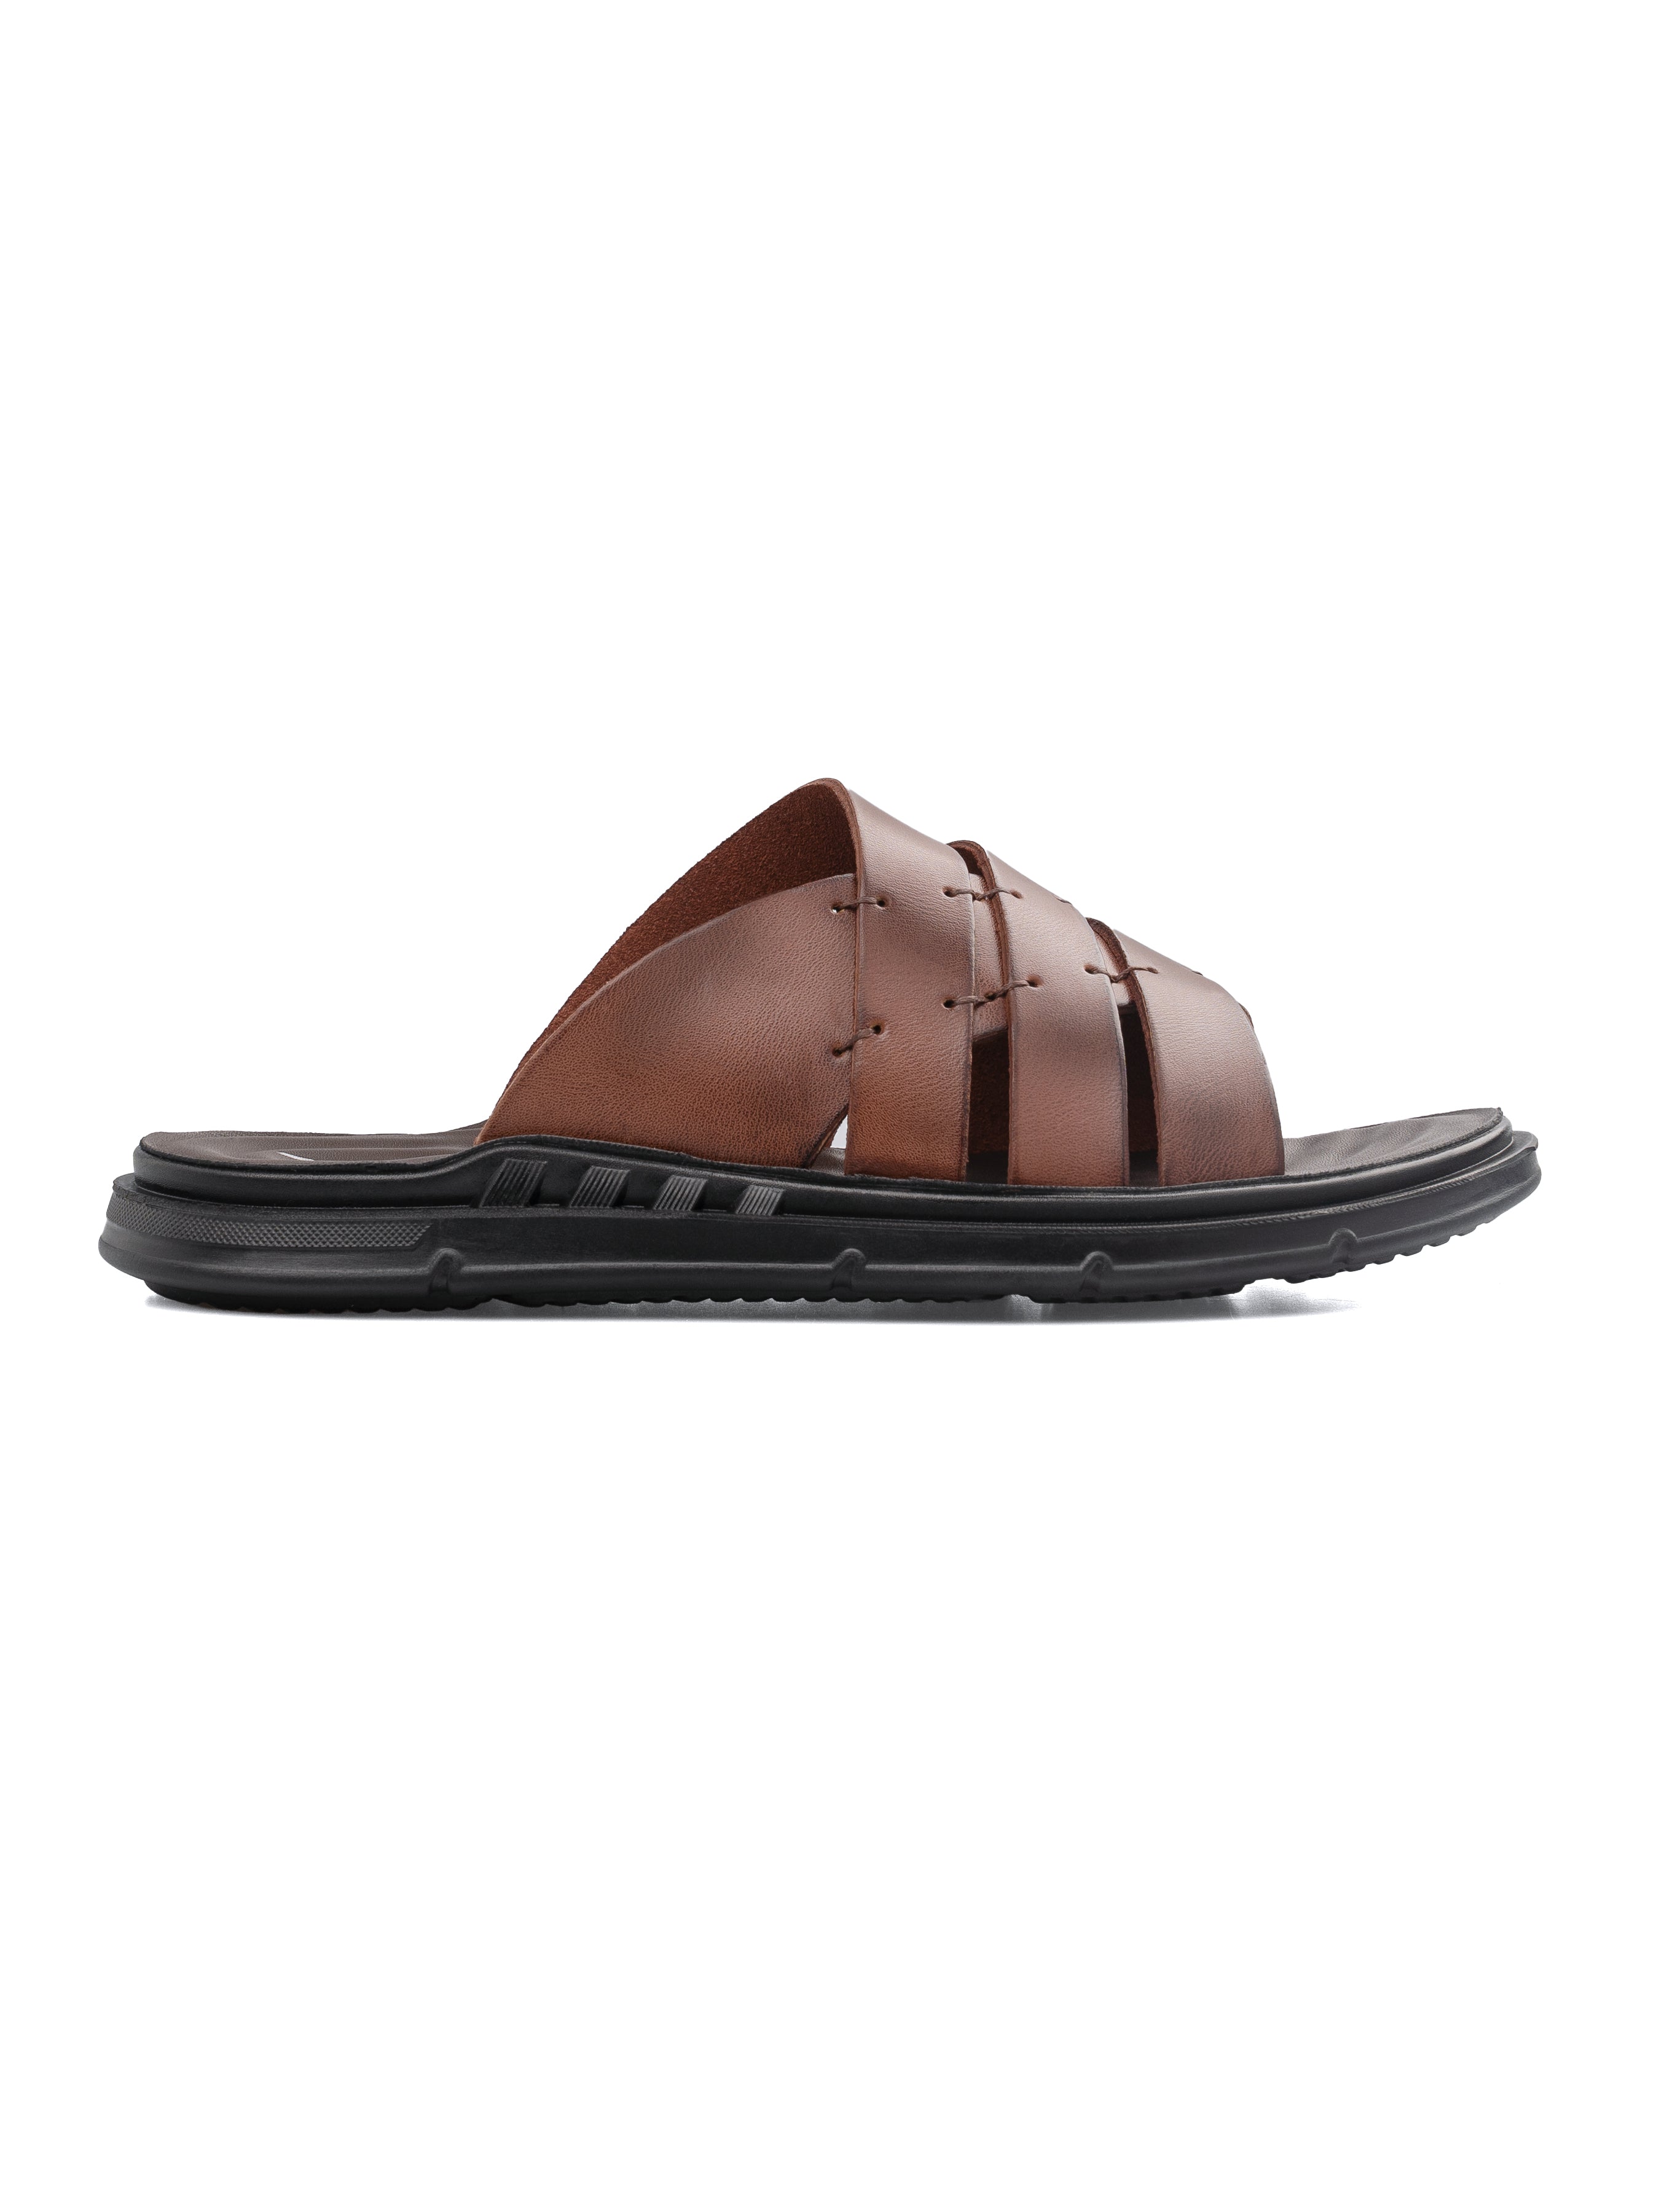 Hael Sandal - Coffee Leather